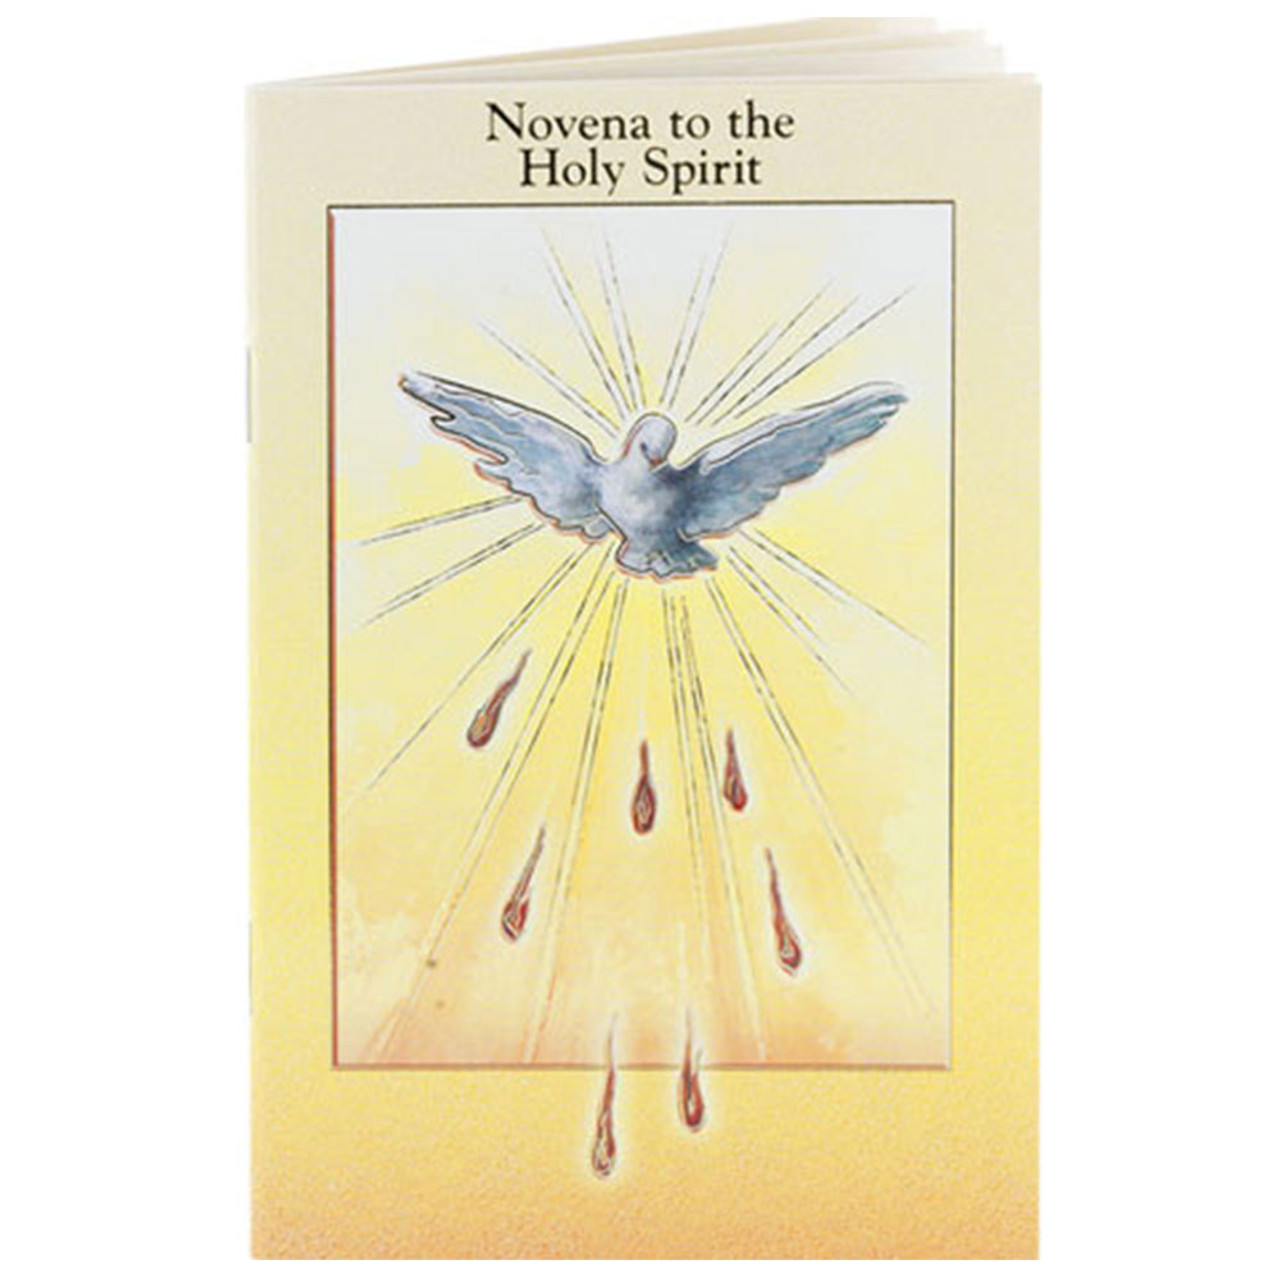 Novena and Prayers to the Holy Spirit